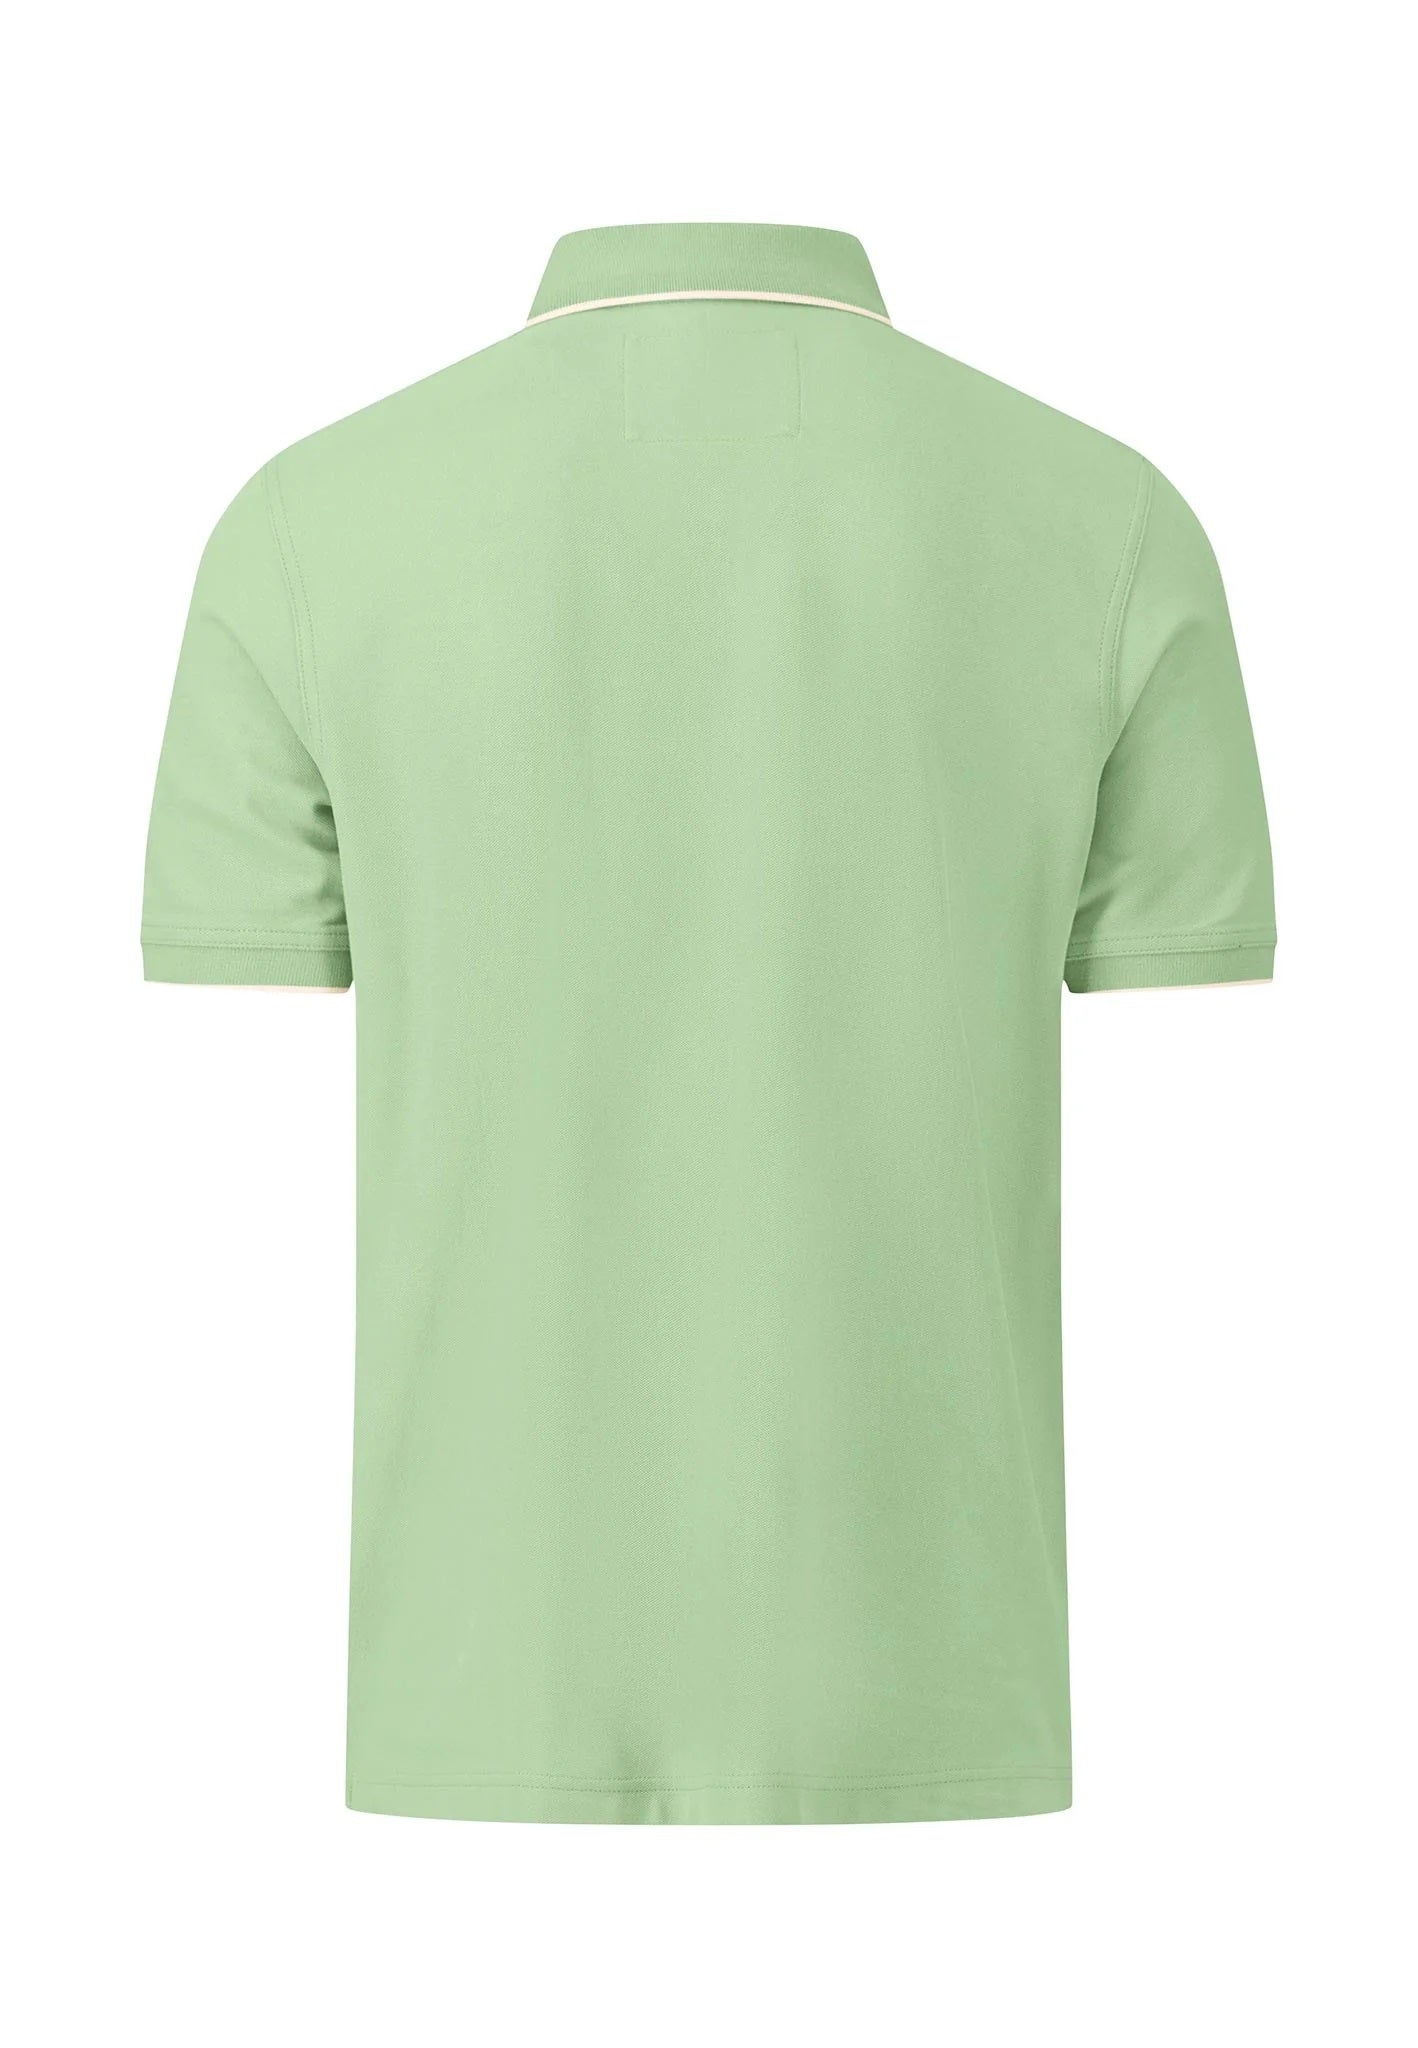 FYNCH HATTON Modern-Fit Polo Shirt - Men's Cotton Pique – Soft Green